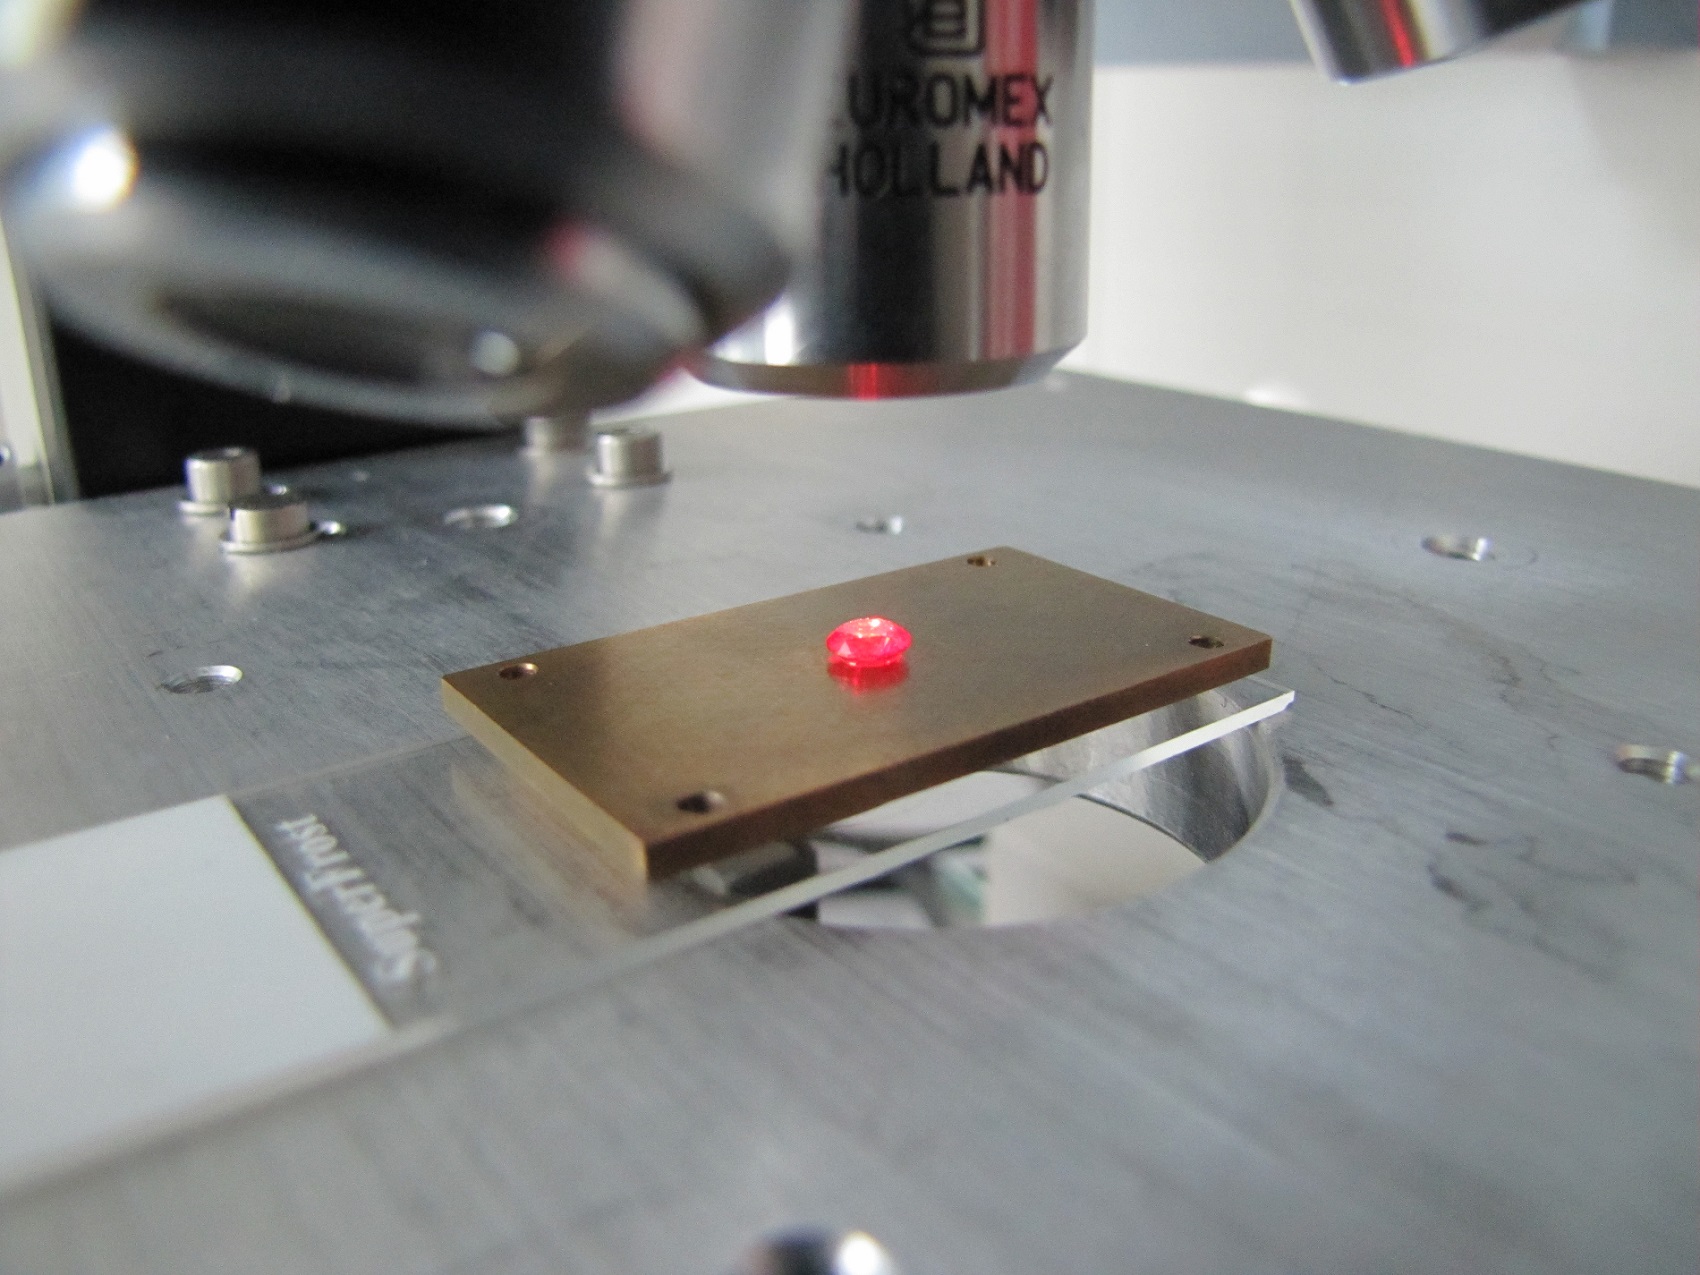 An artificial diamond under the optical microscope